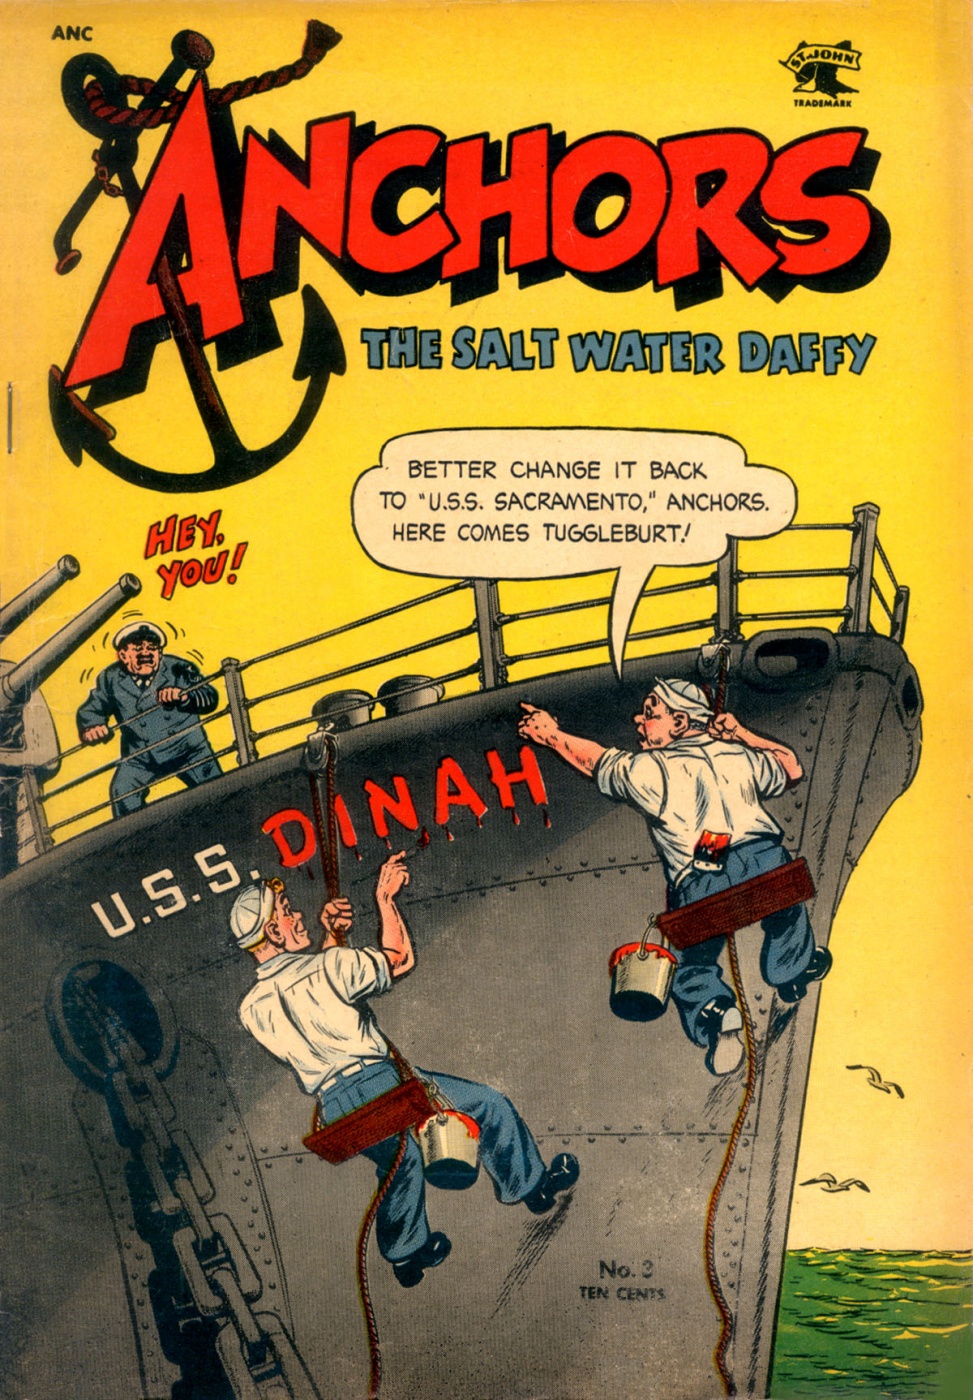 Anchors the Salt Water Daffy - Comics (b) (1)